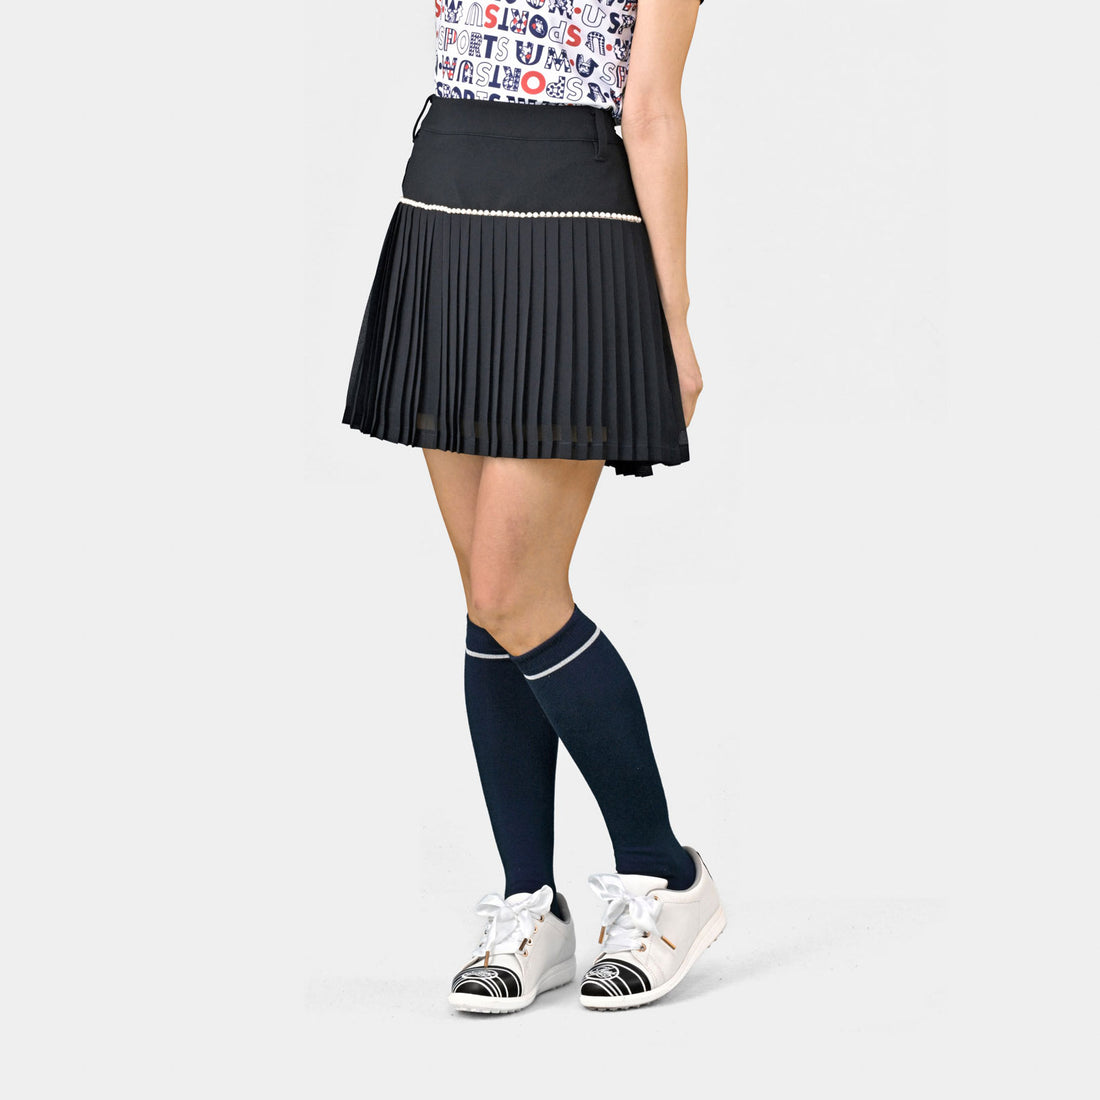 High tension twine pleated skirt (801J6500)